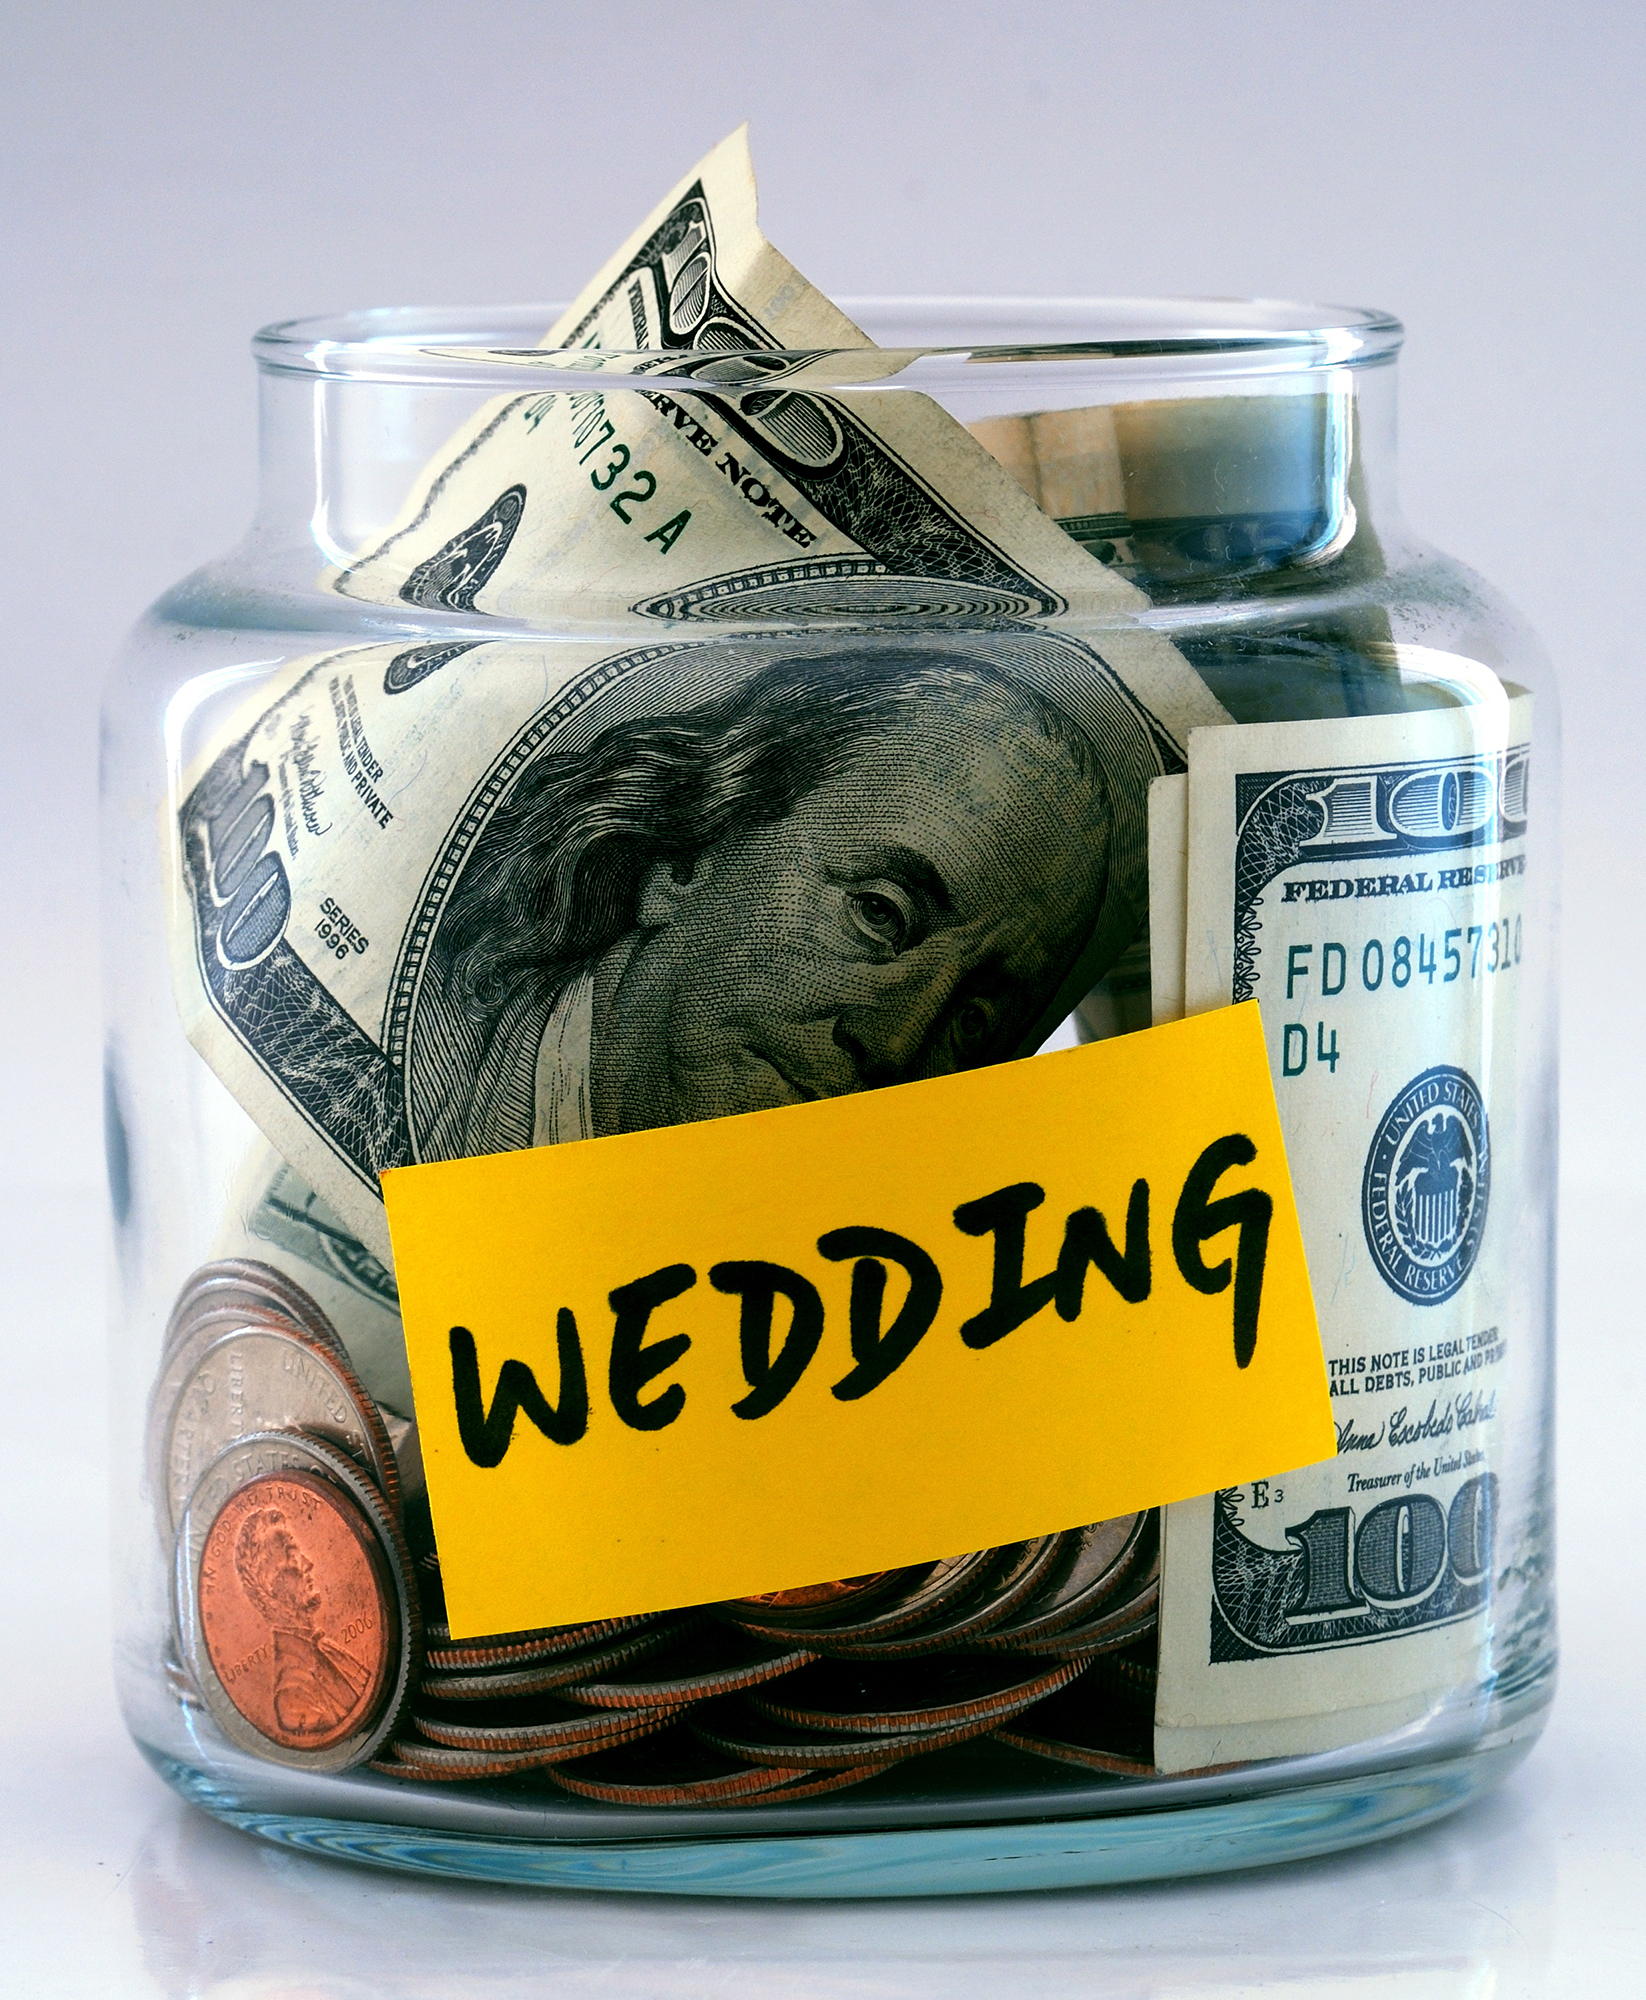 Wedding savings in glass jar